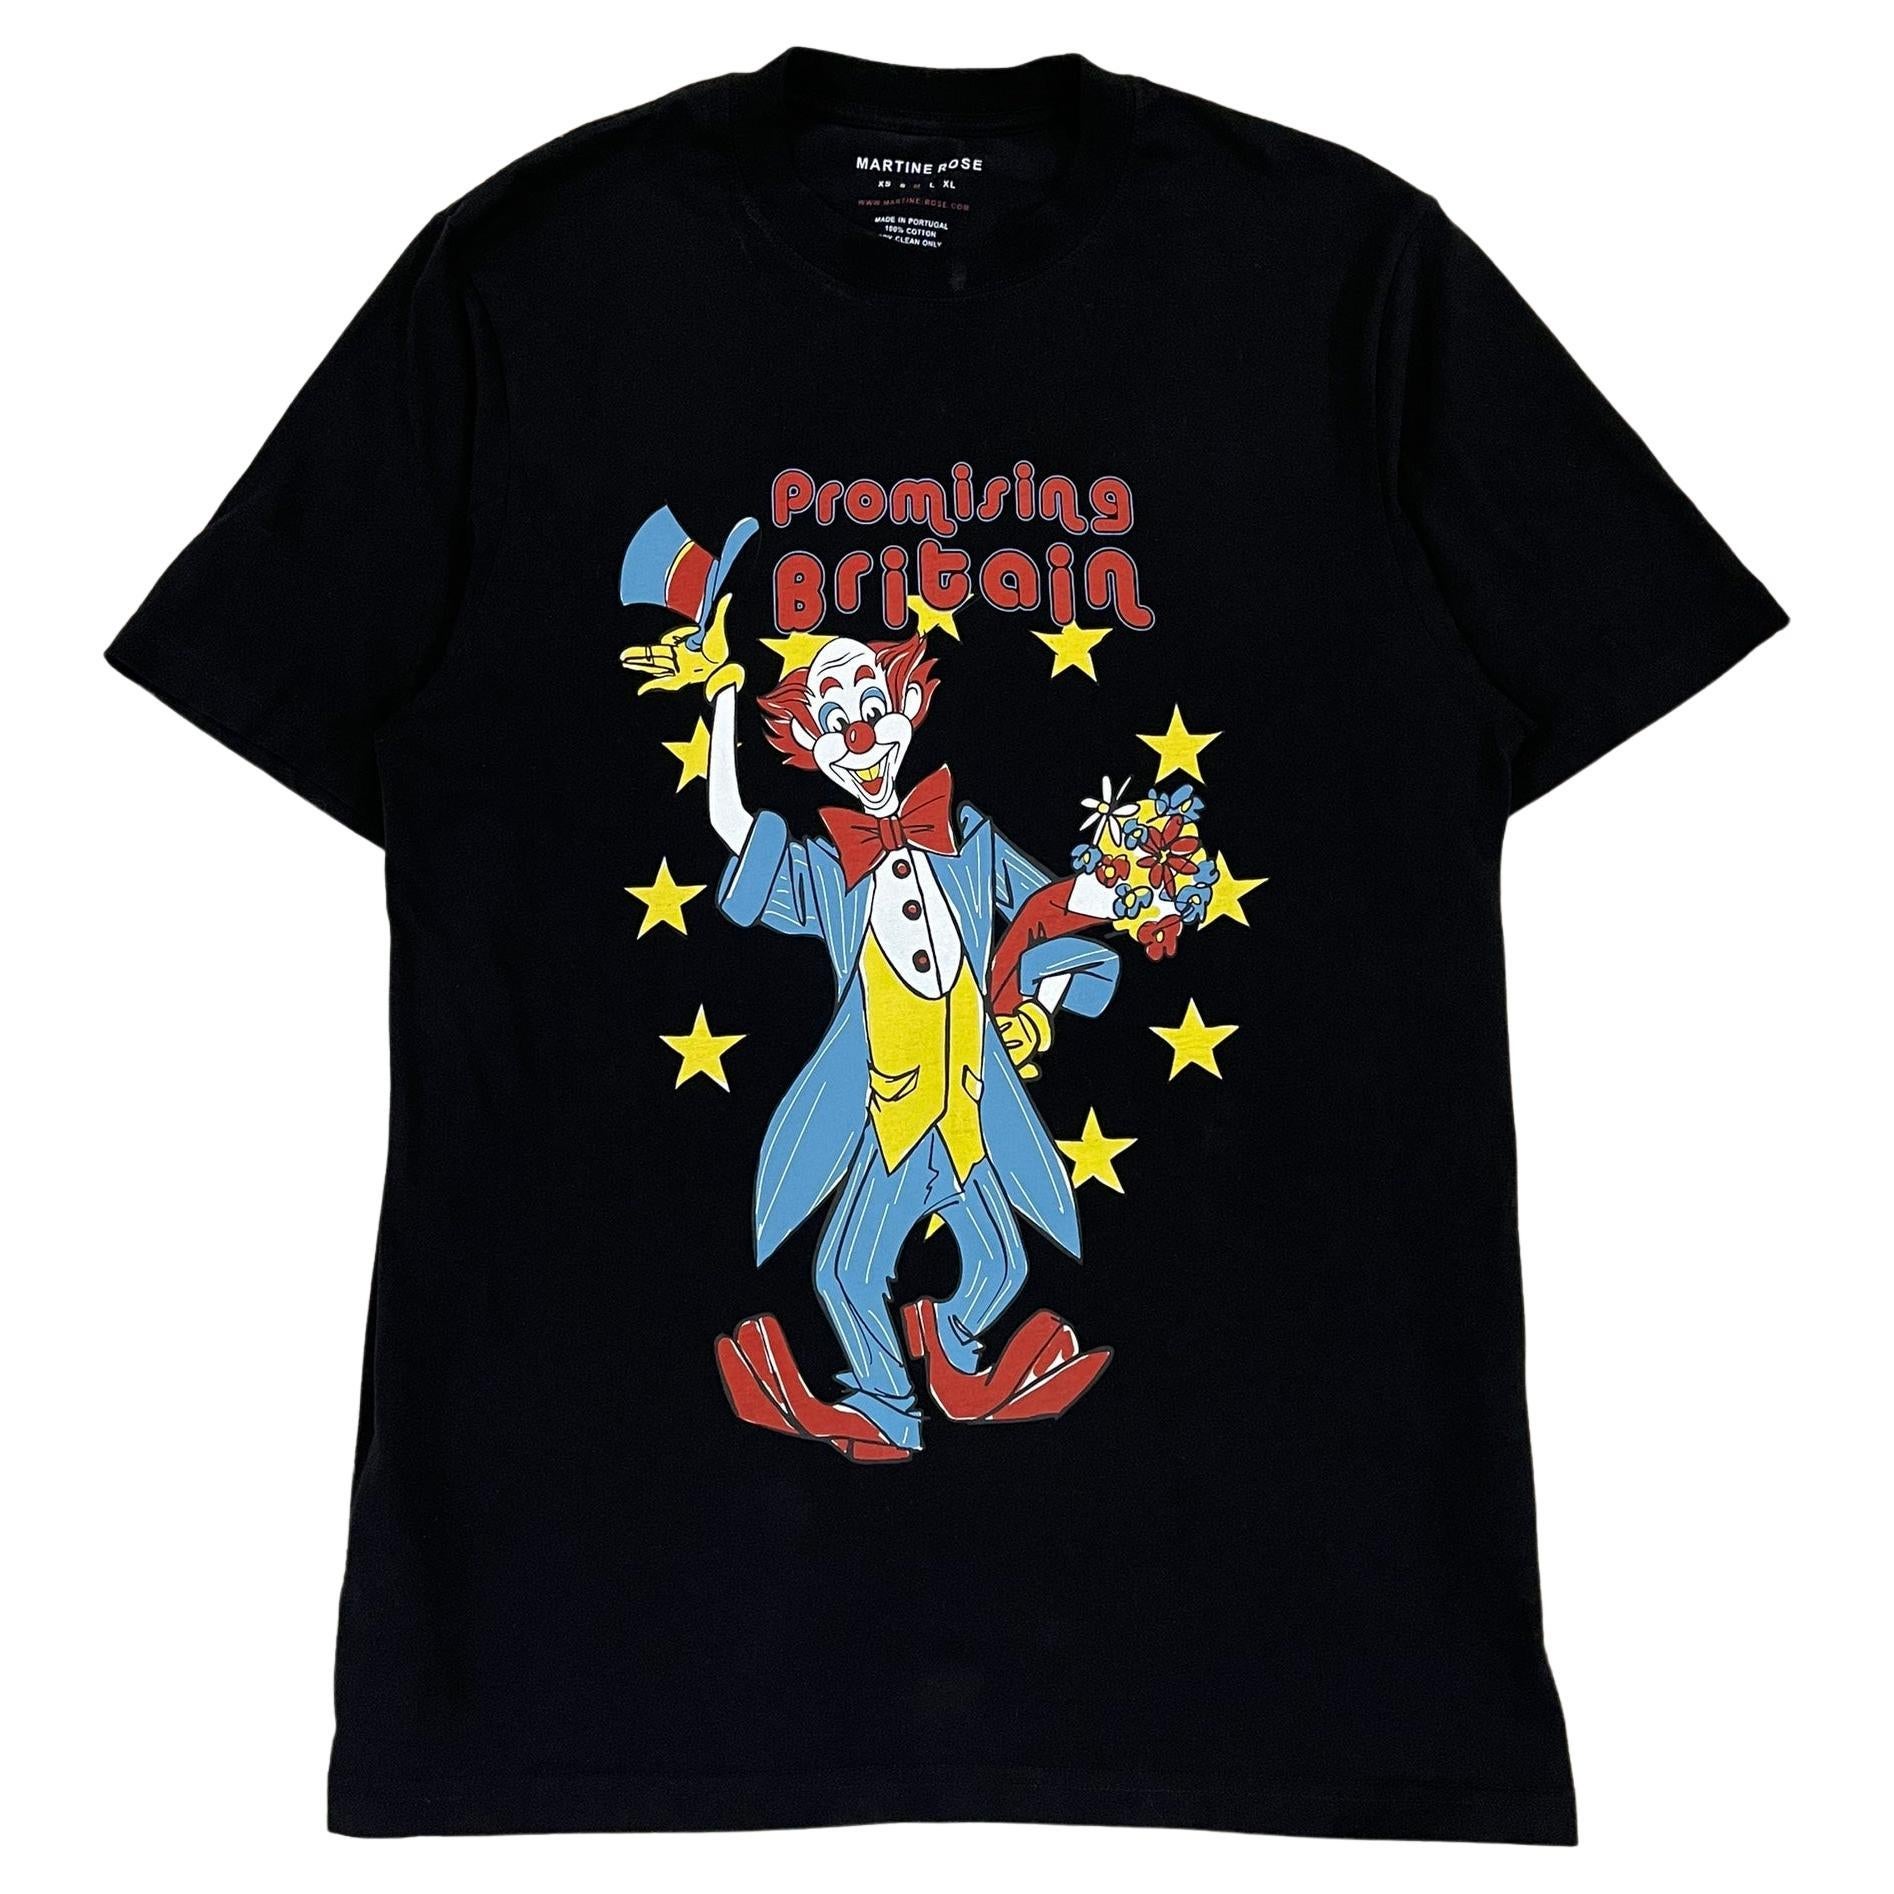 Martine Rose "Promising Britain" Clown T-Shirt For Sale